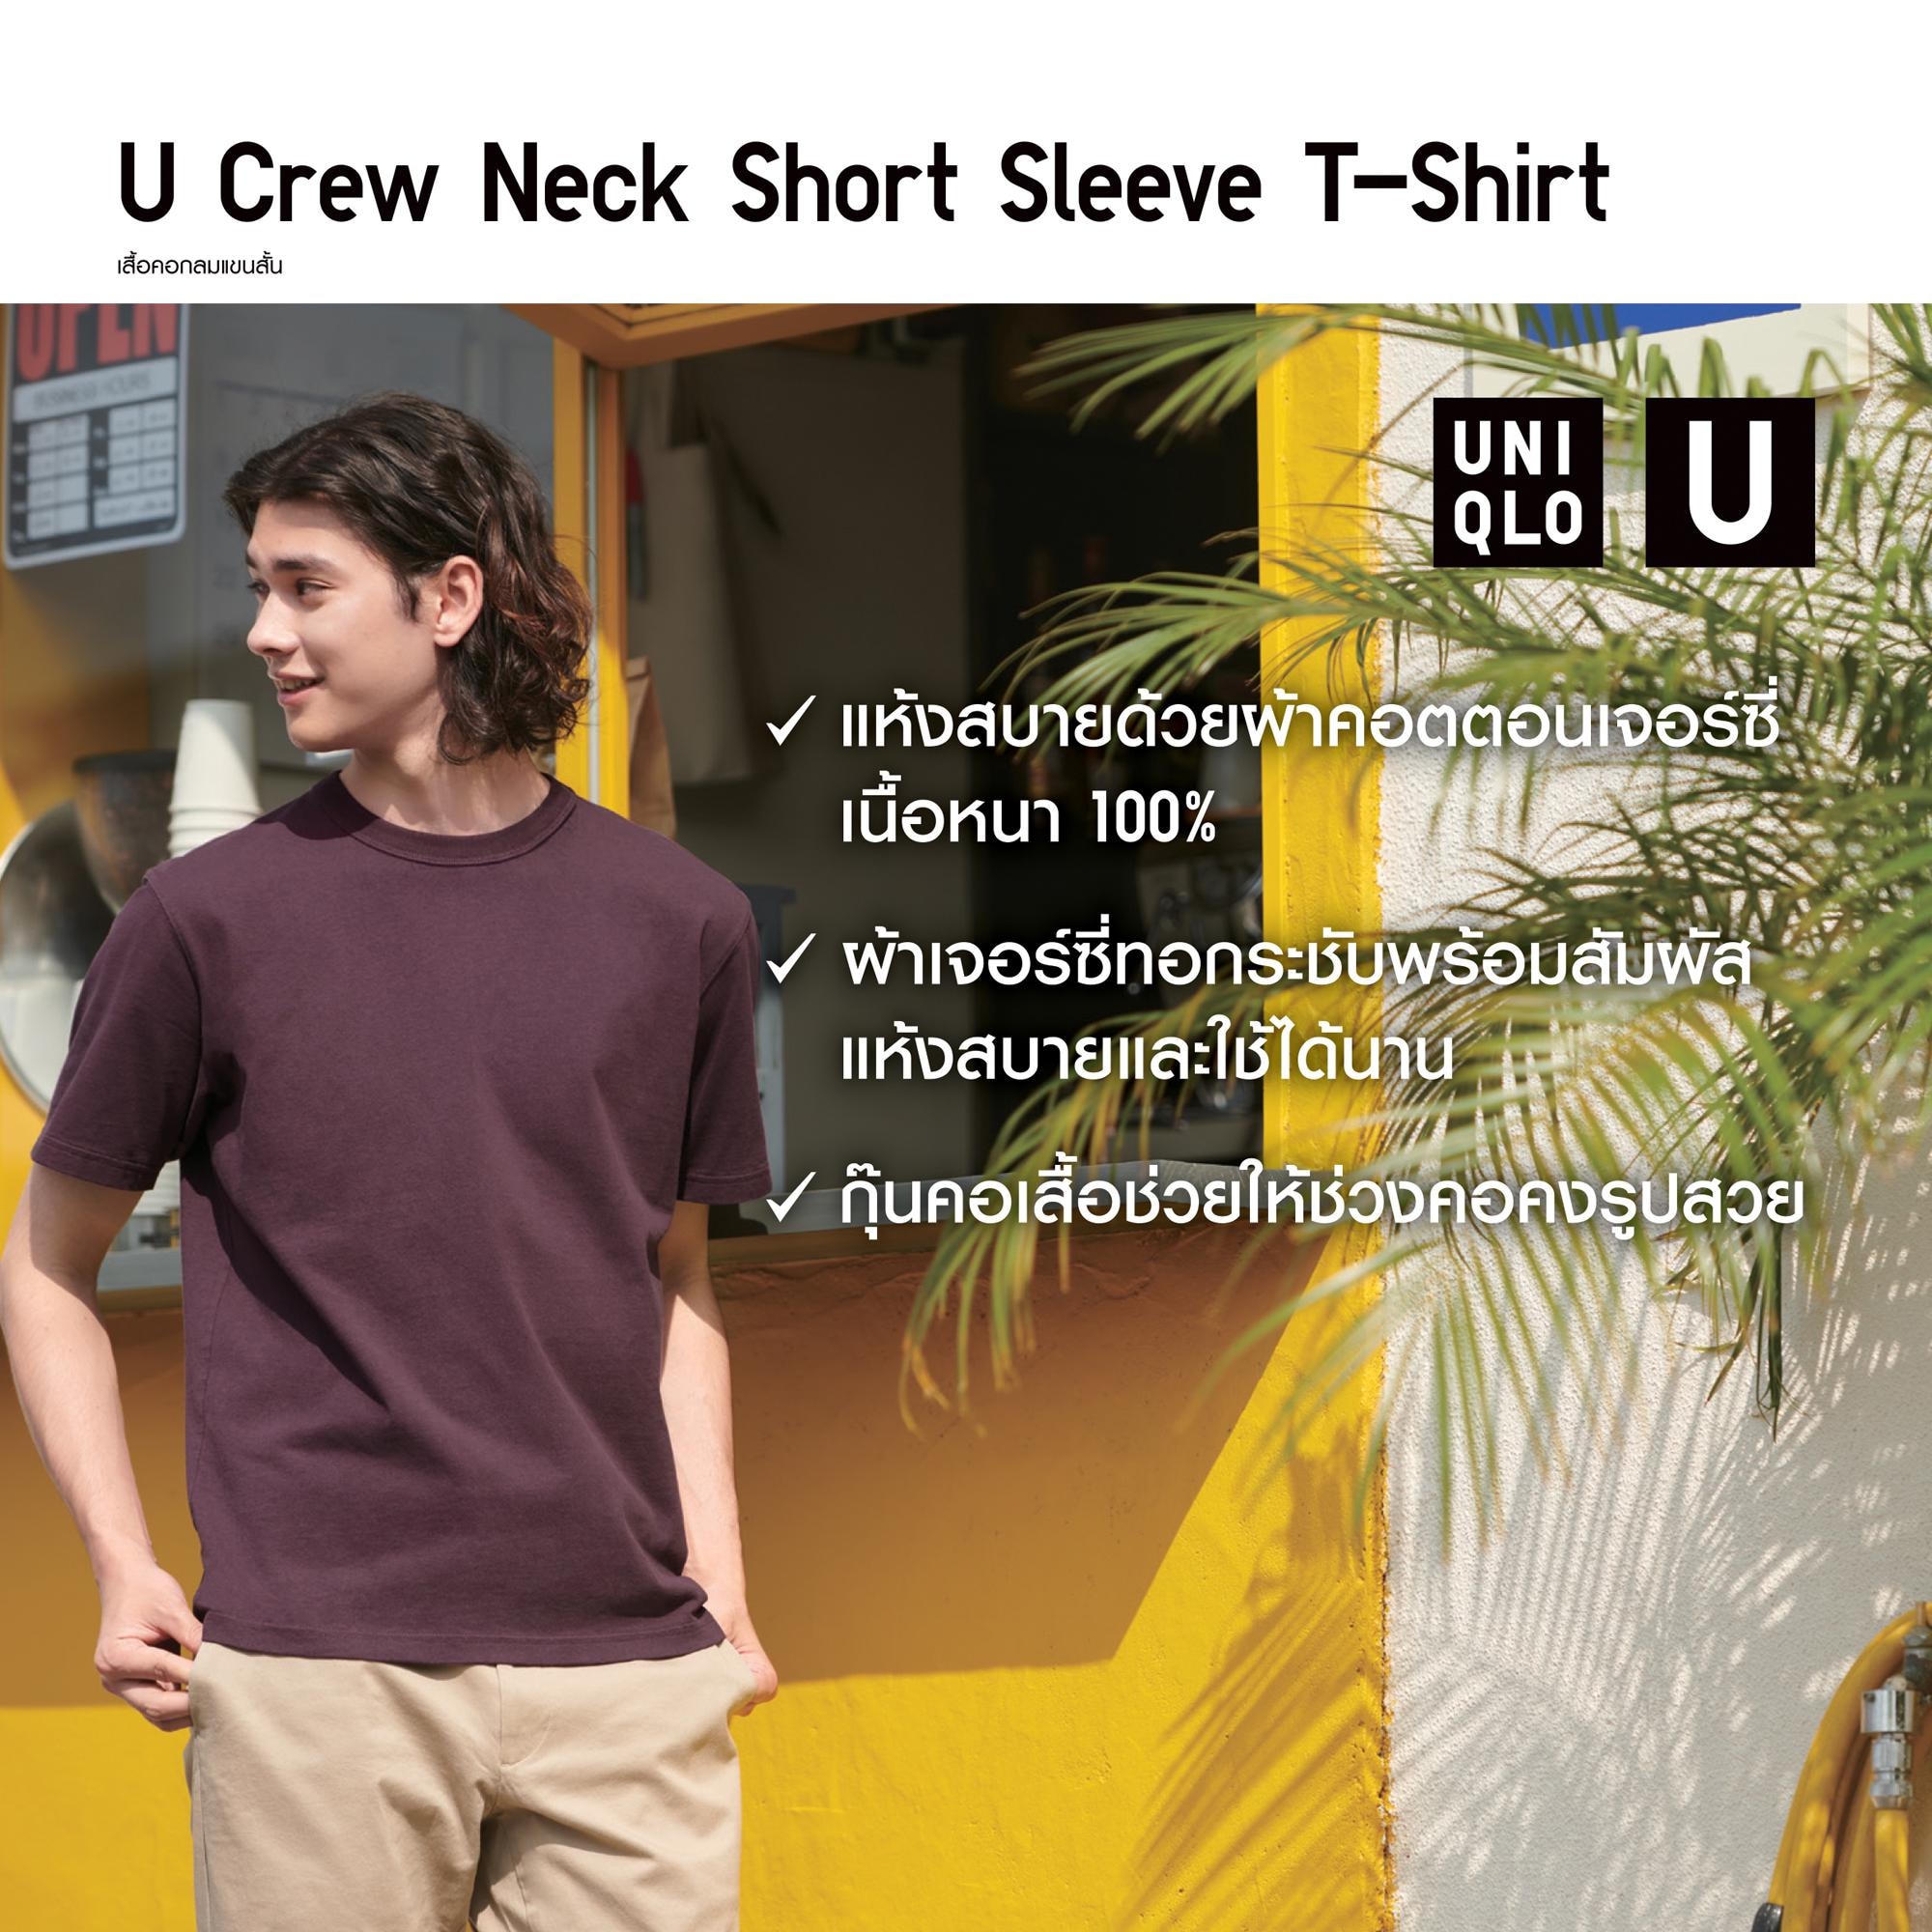 Uniqlos latest branch New U adds more buzz to Siam